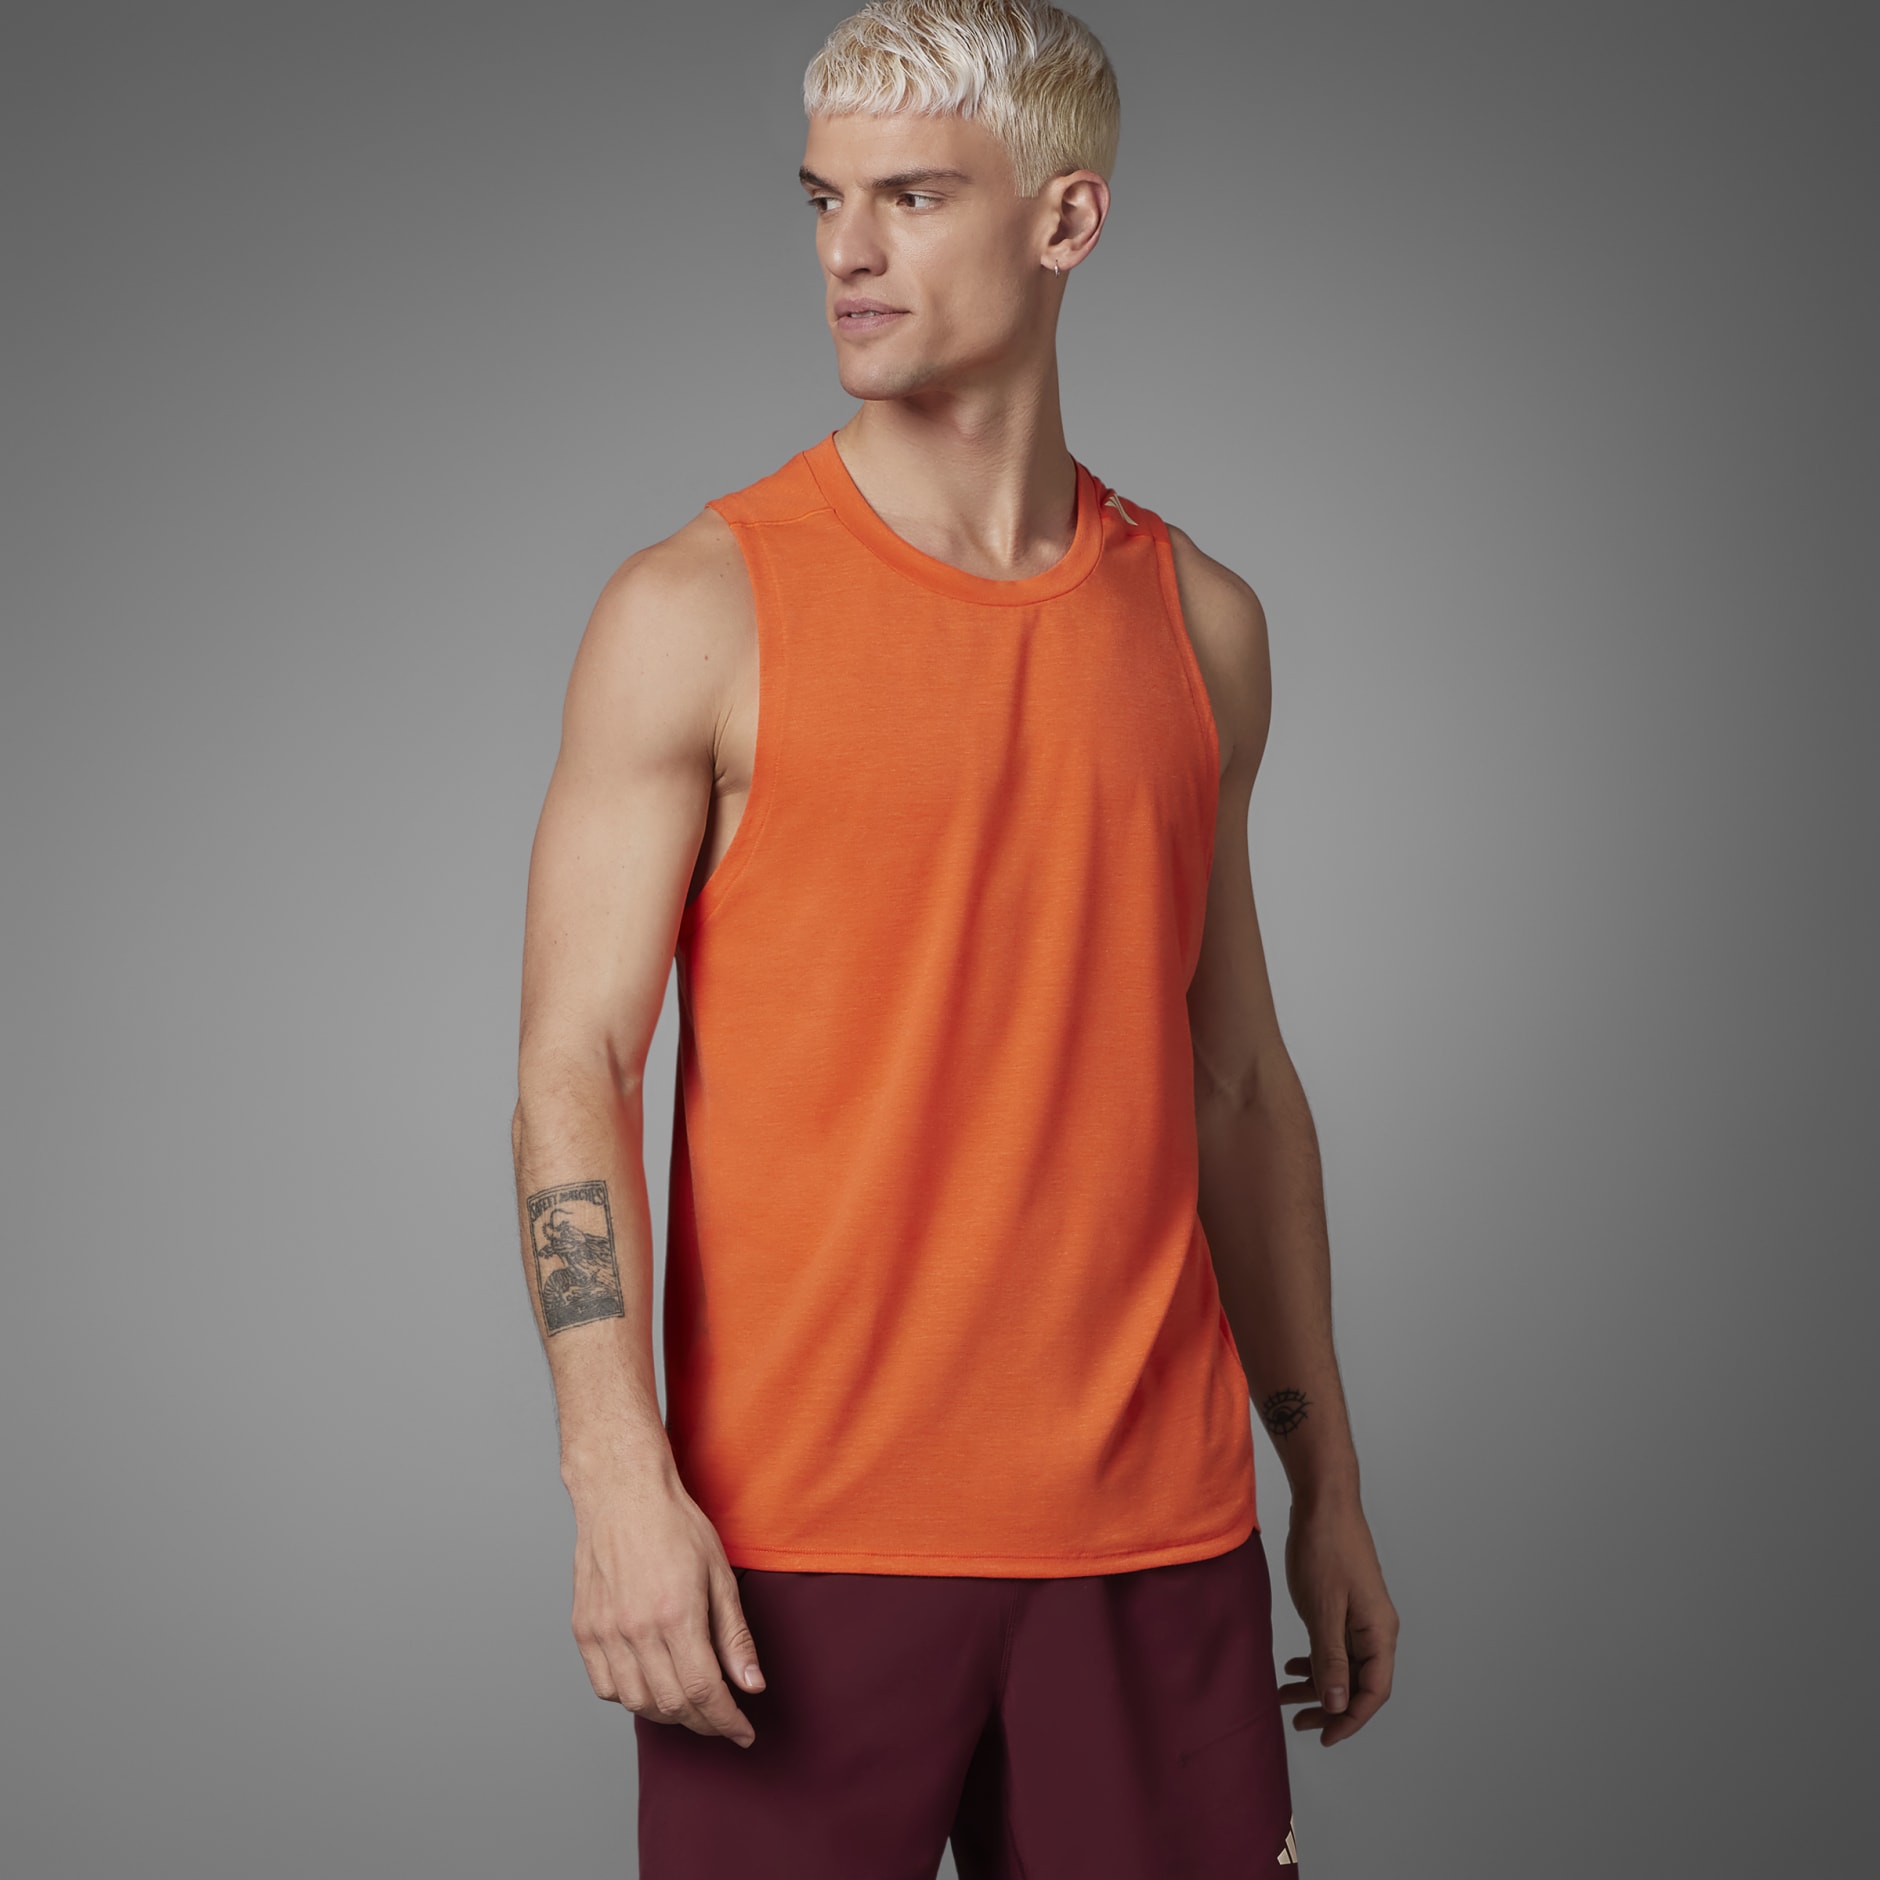 Clothing - Lift Your Mind Designed for Training Tank Top - Orange ...